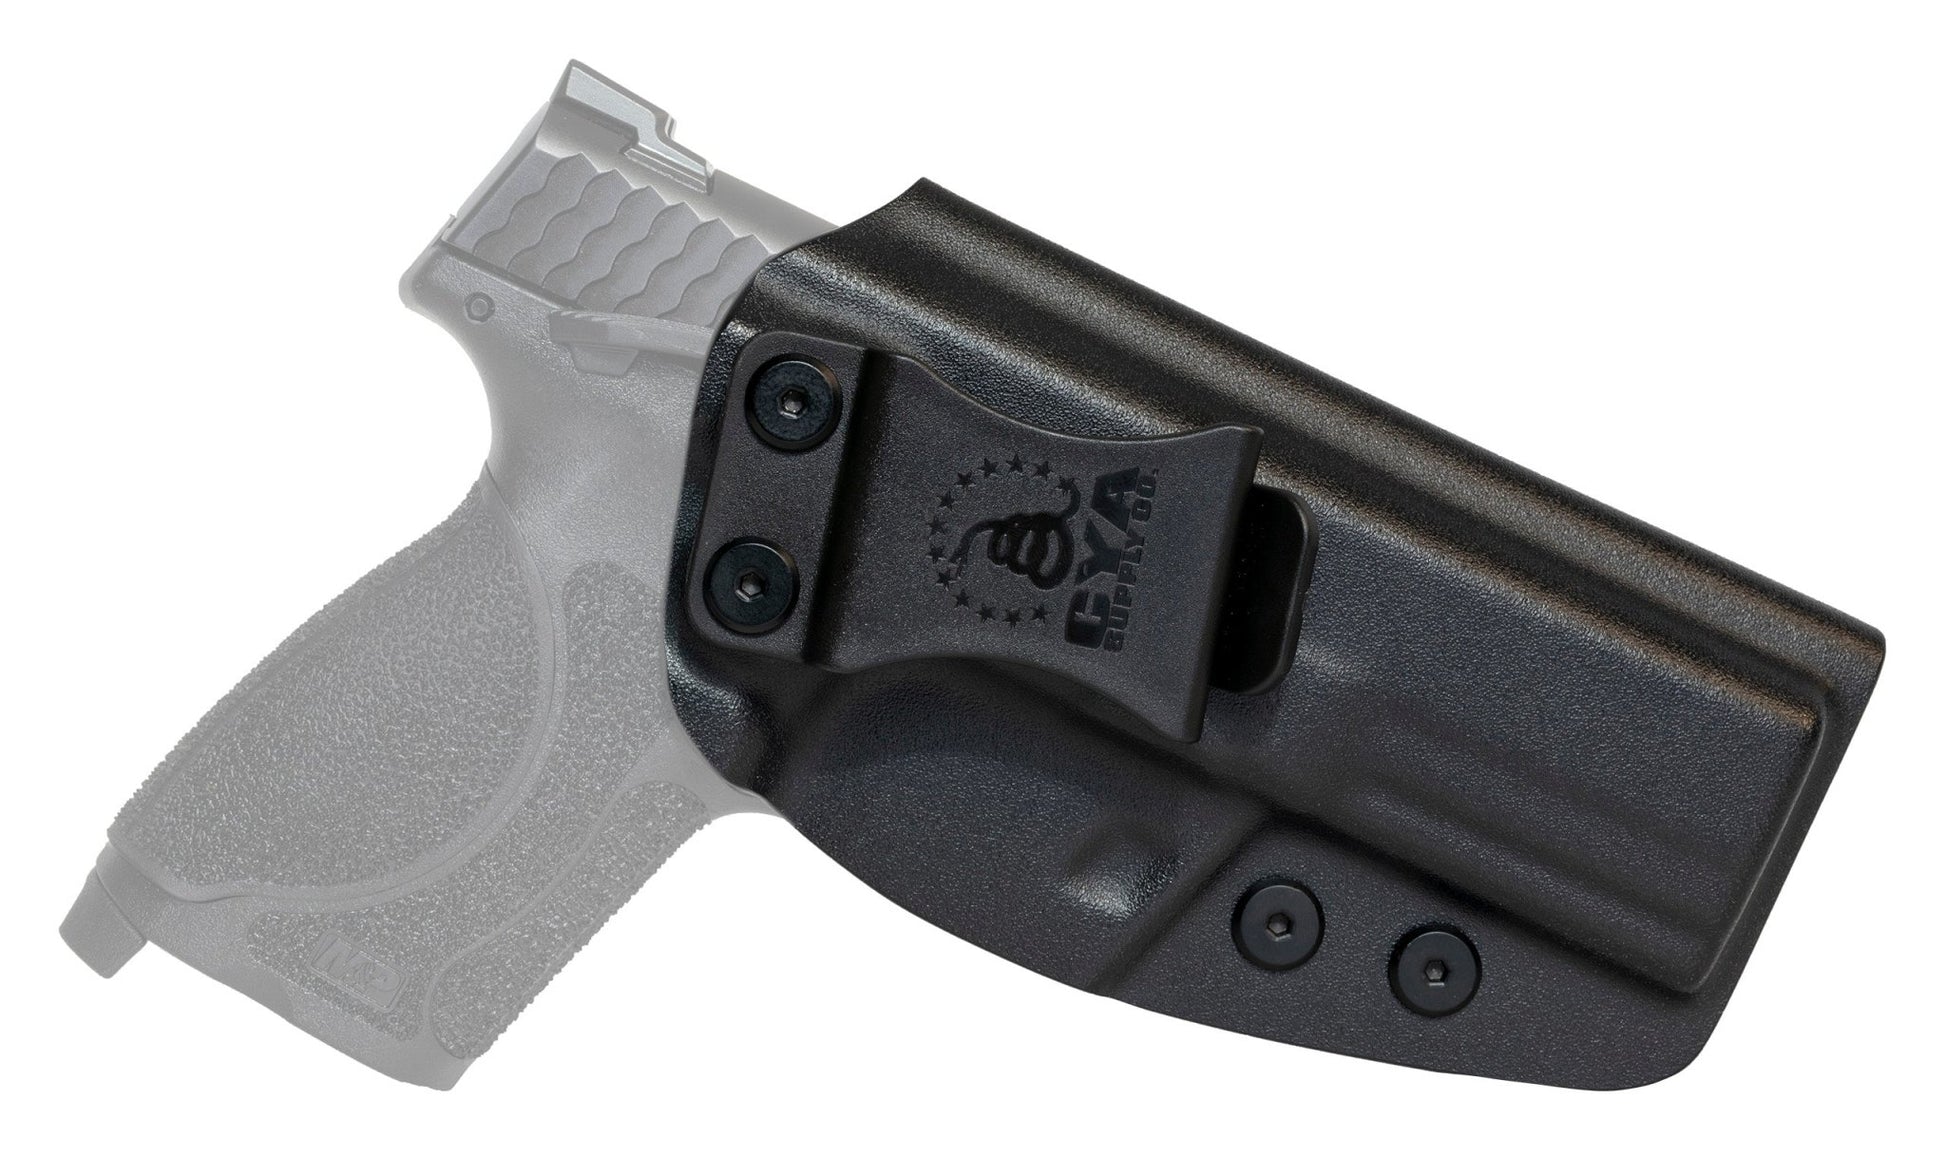 Smith & Wesson M&P M2.0 Compact 4" Holster | Base IWB | CYA Supply Co. CYA Supply Co.